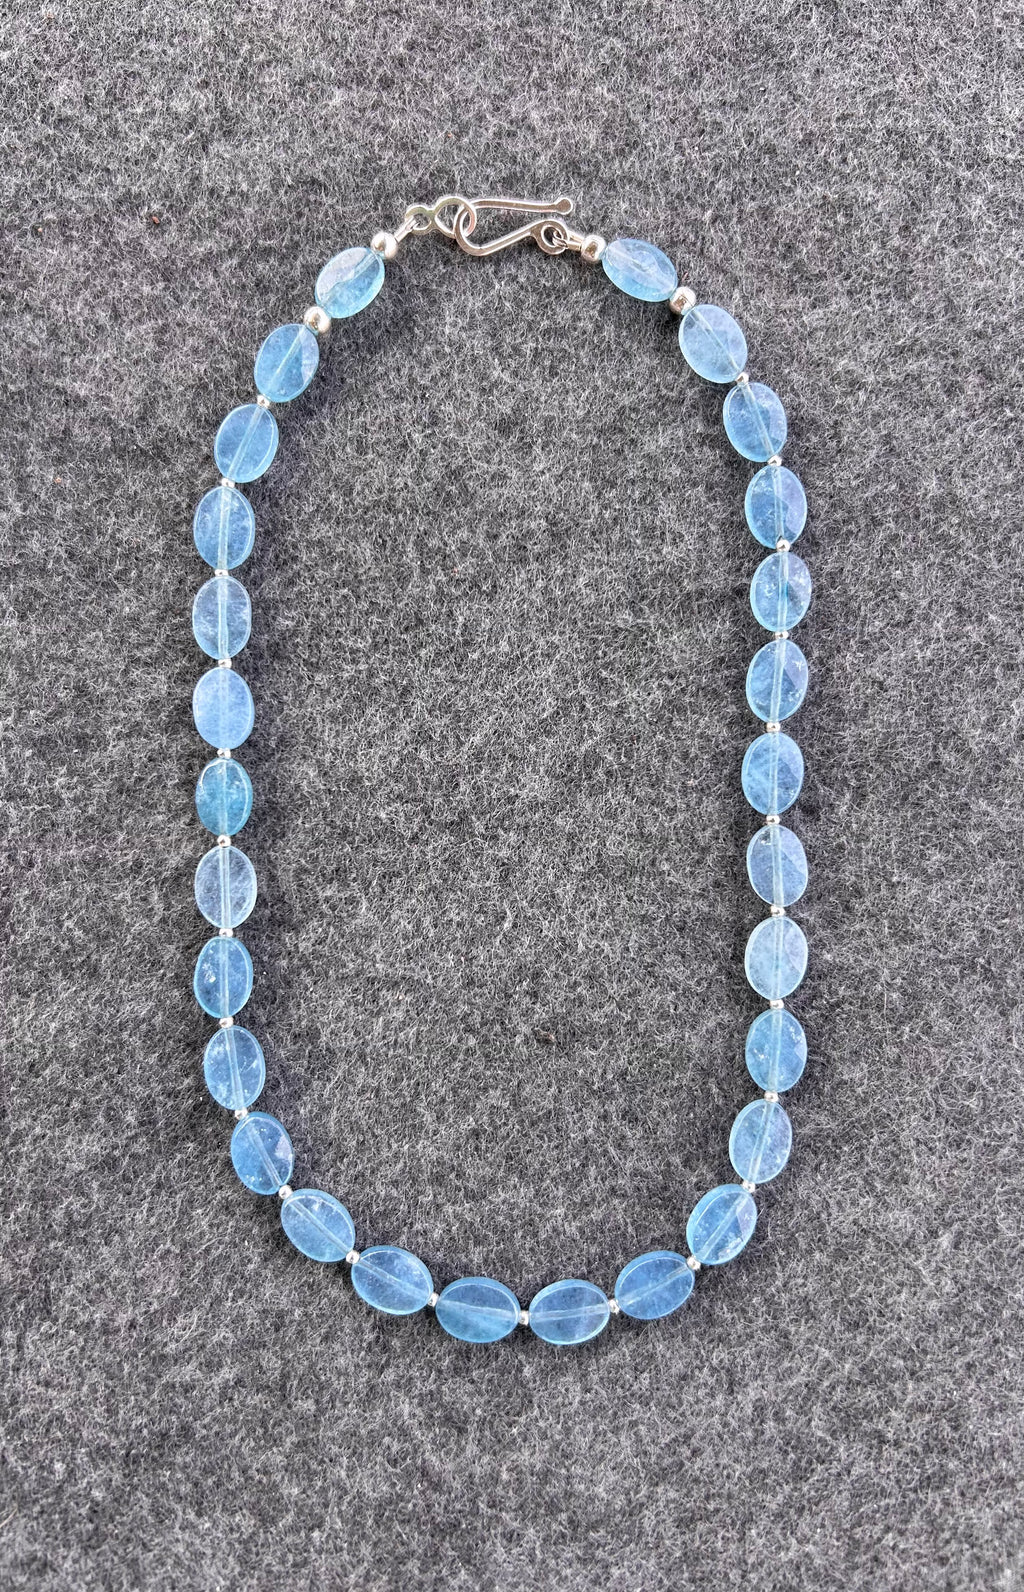 Aqua Quartz Gemstone Necklace with Sterling Silver